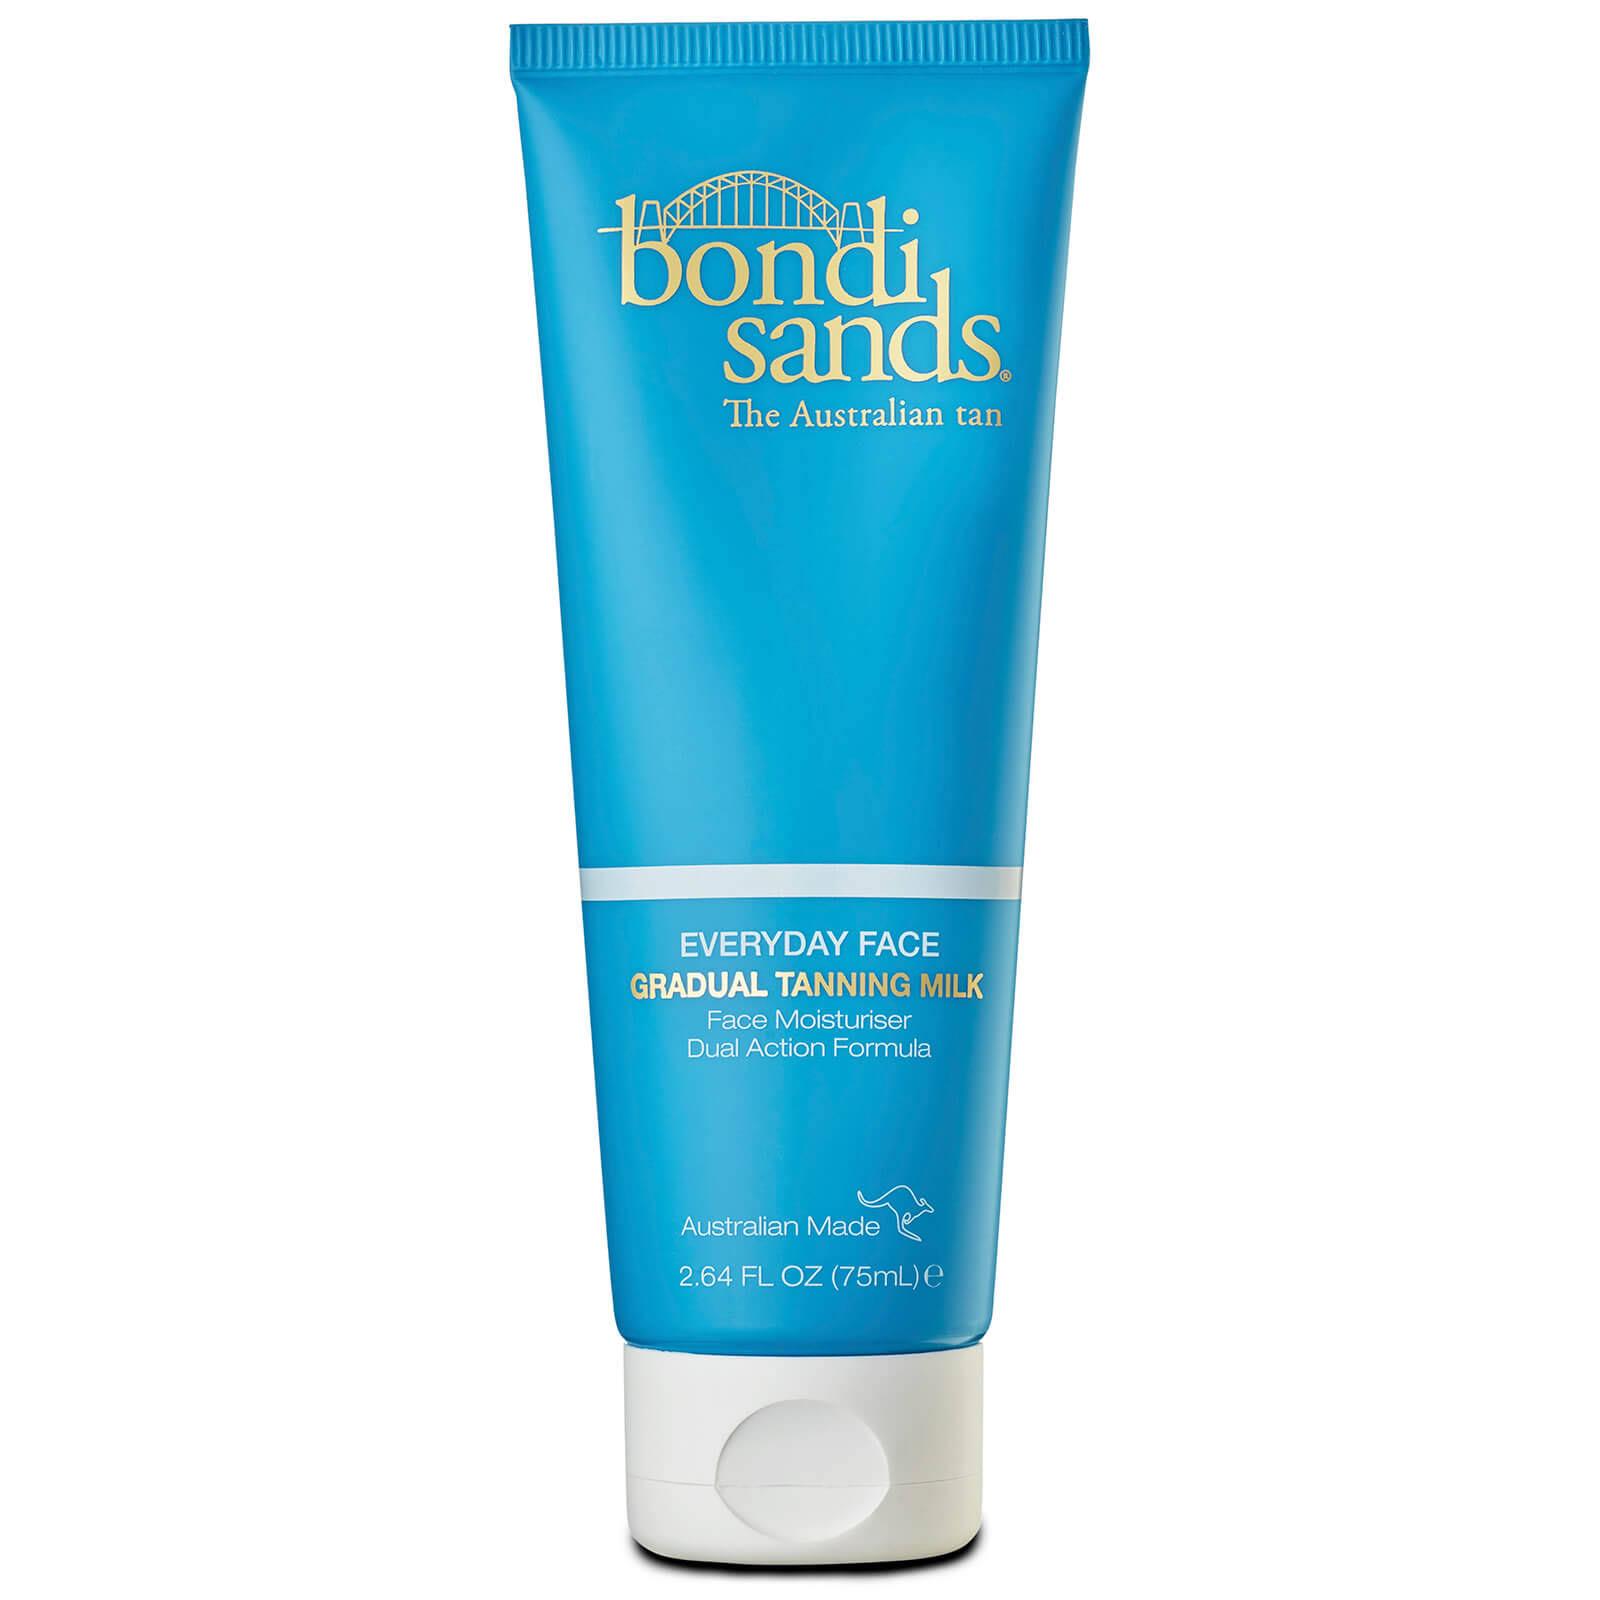 Bondi Sands Everyday Face Gradual Tanning Milk (75ml)